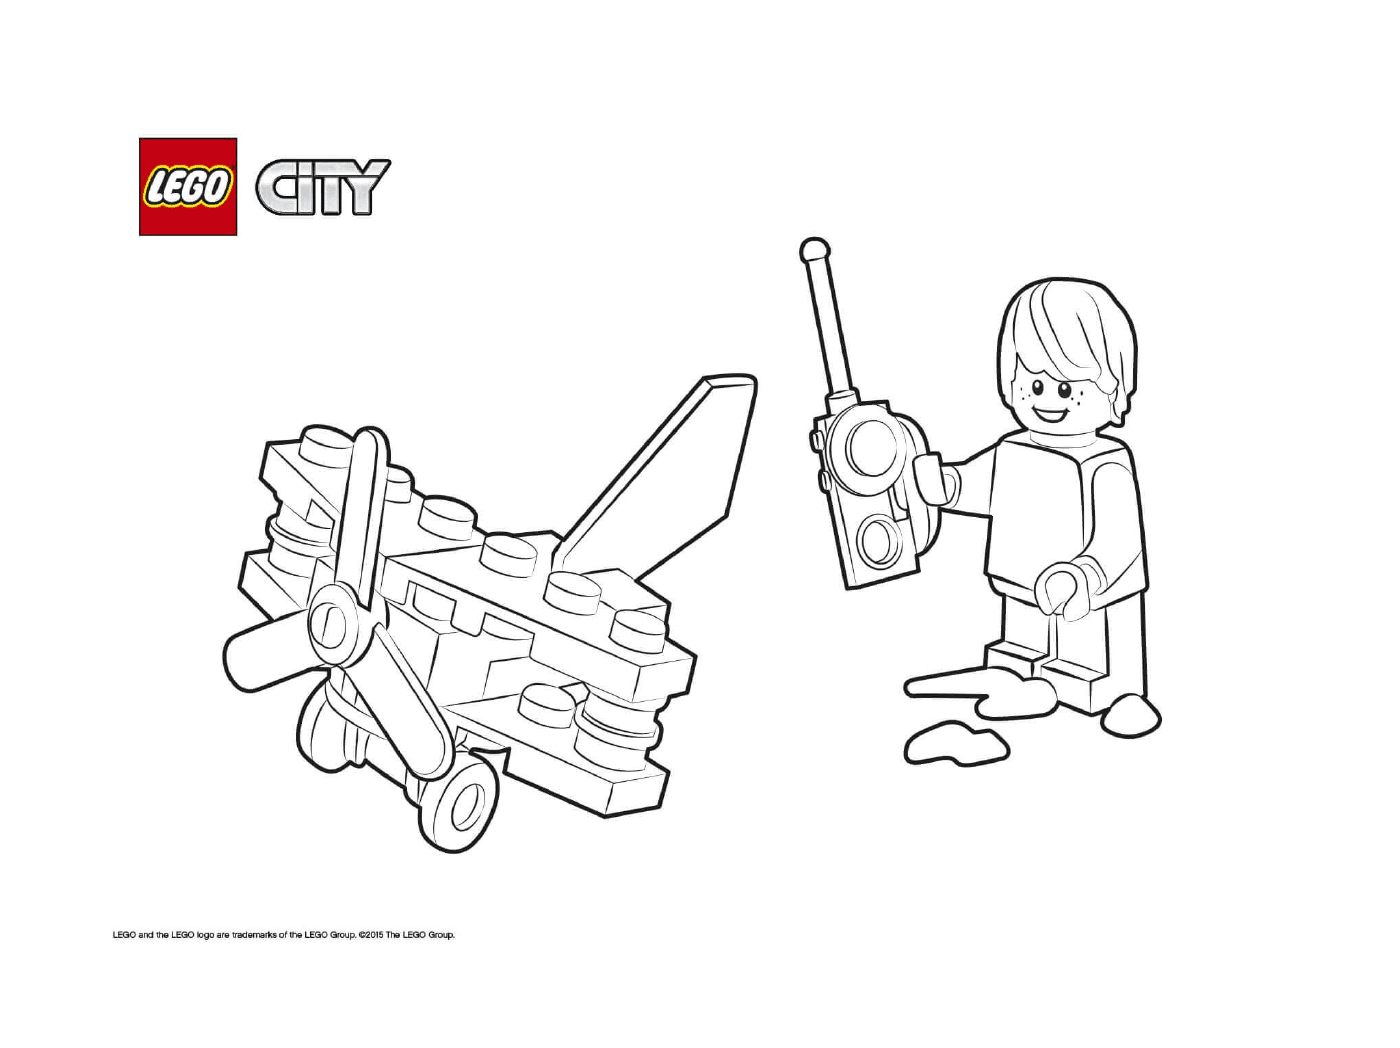  Small plane Lego City 